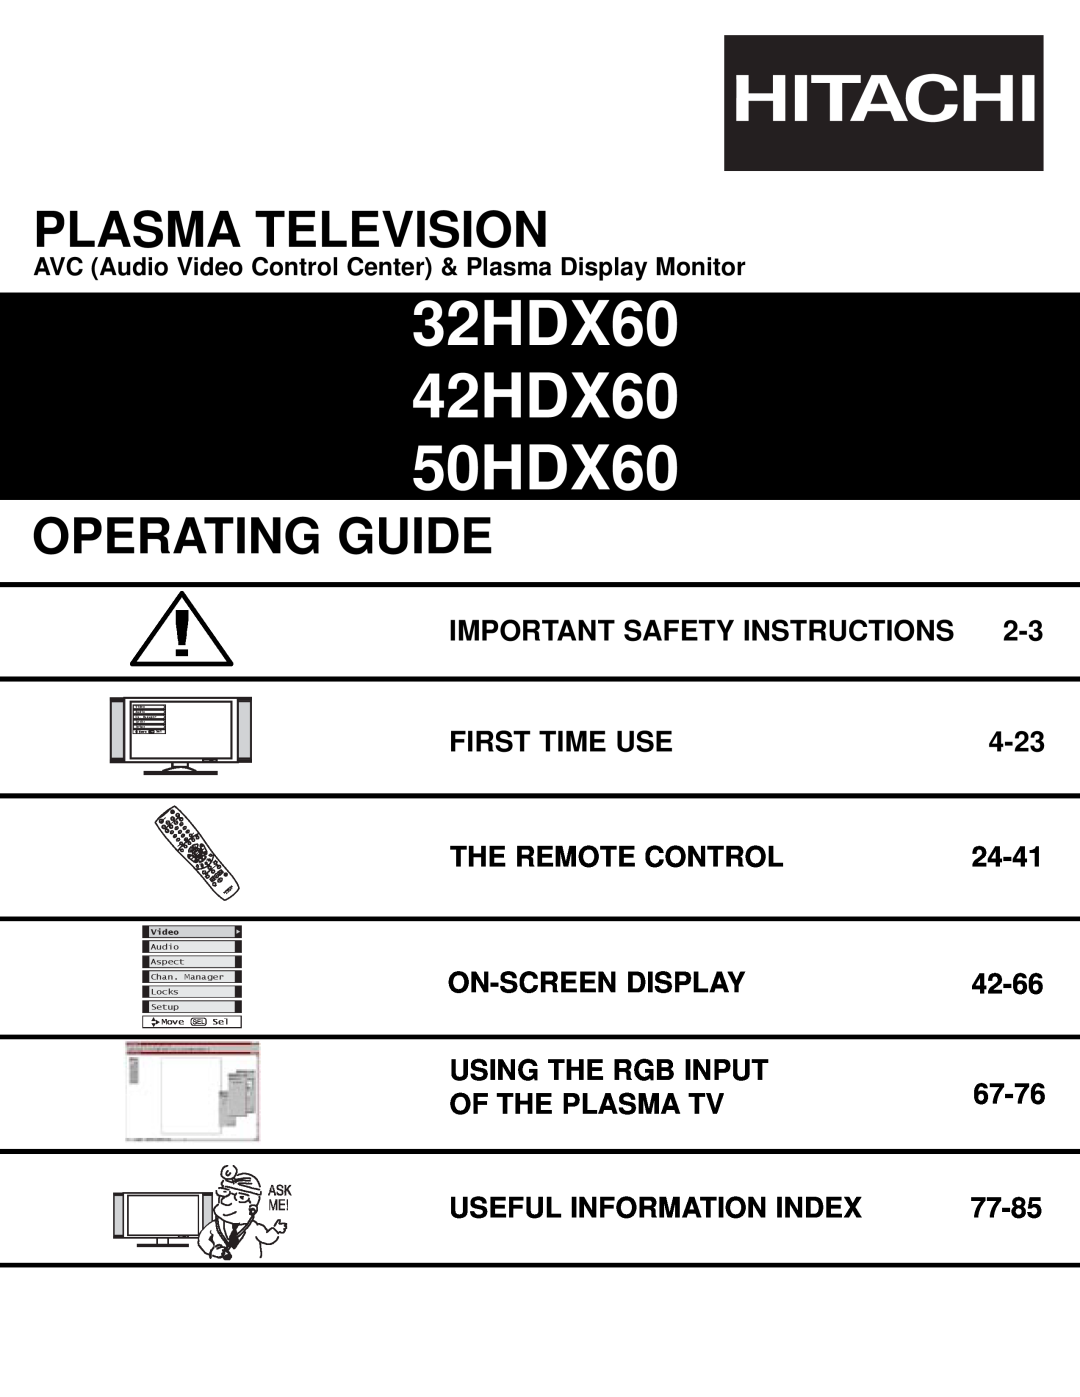 Hitachi important safety instructions 32HDX60 42HDX60 50HDX60, Plasma Television, Operating Guide 